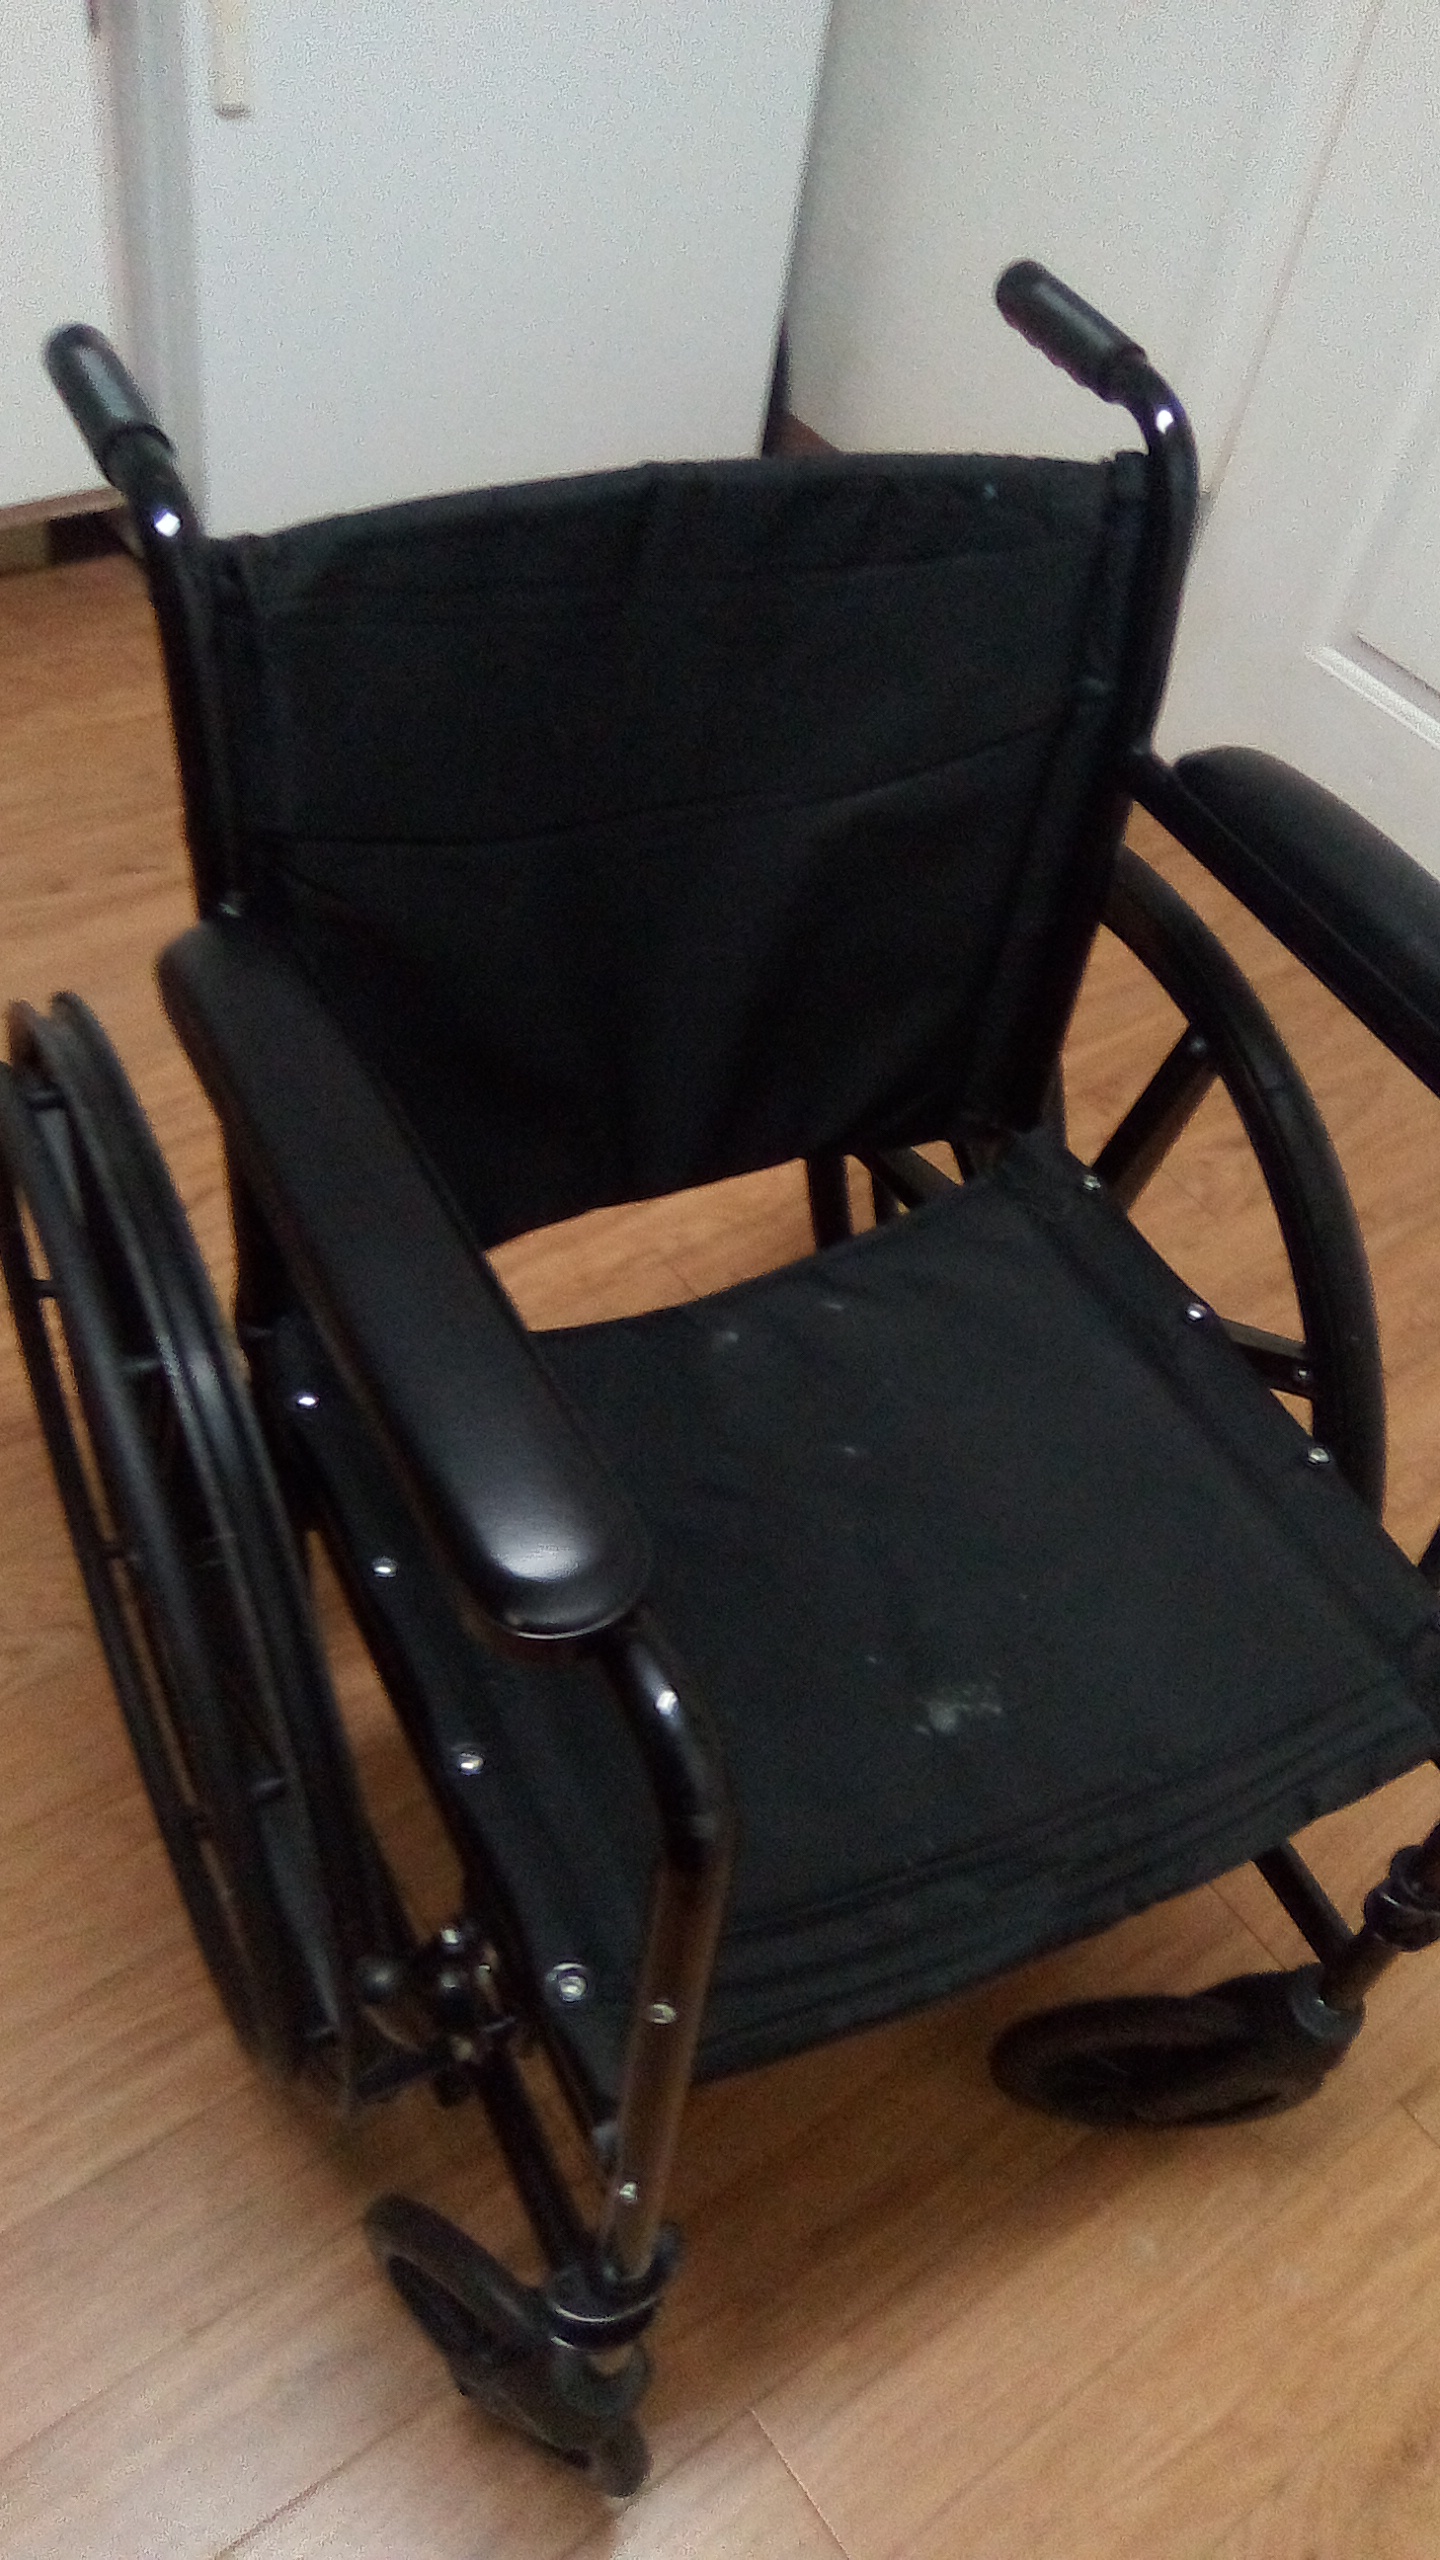 My wheelchair